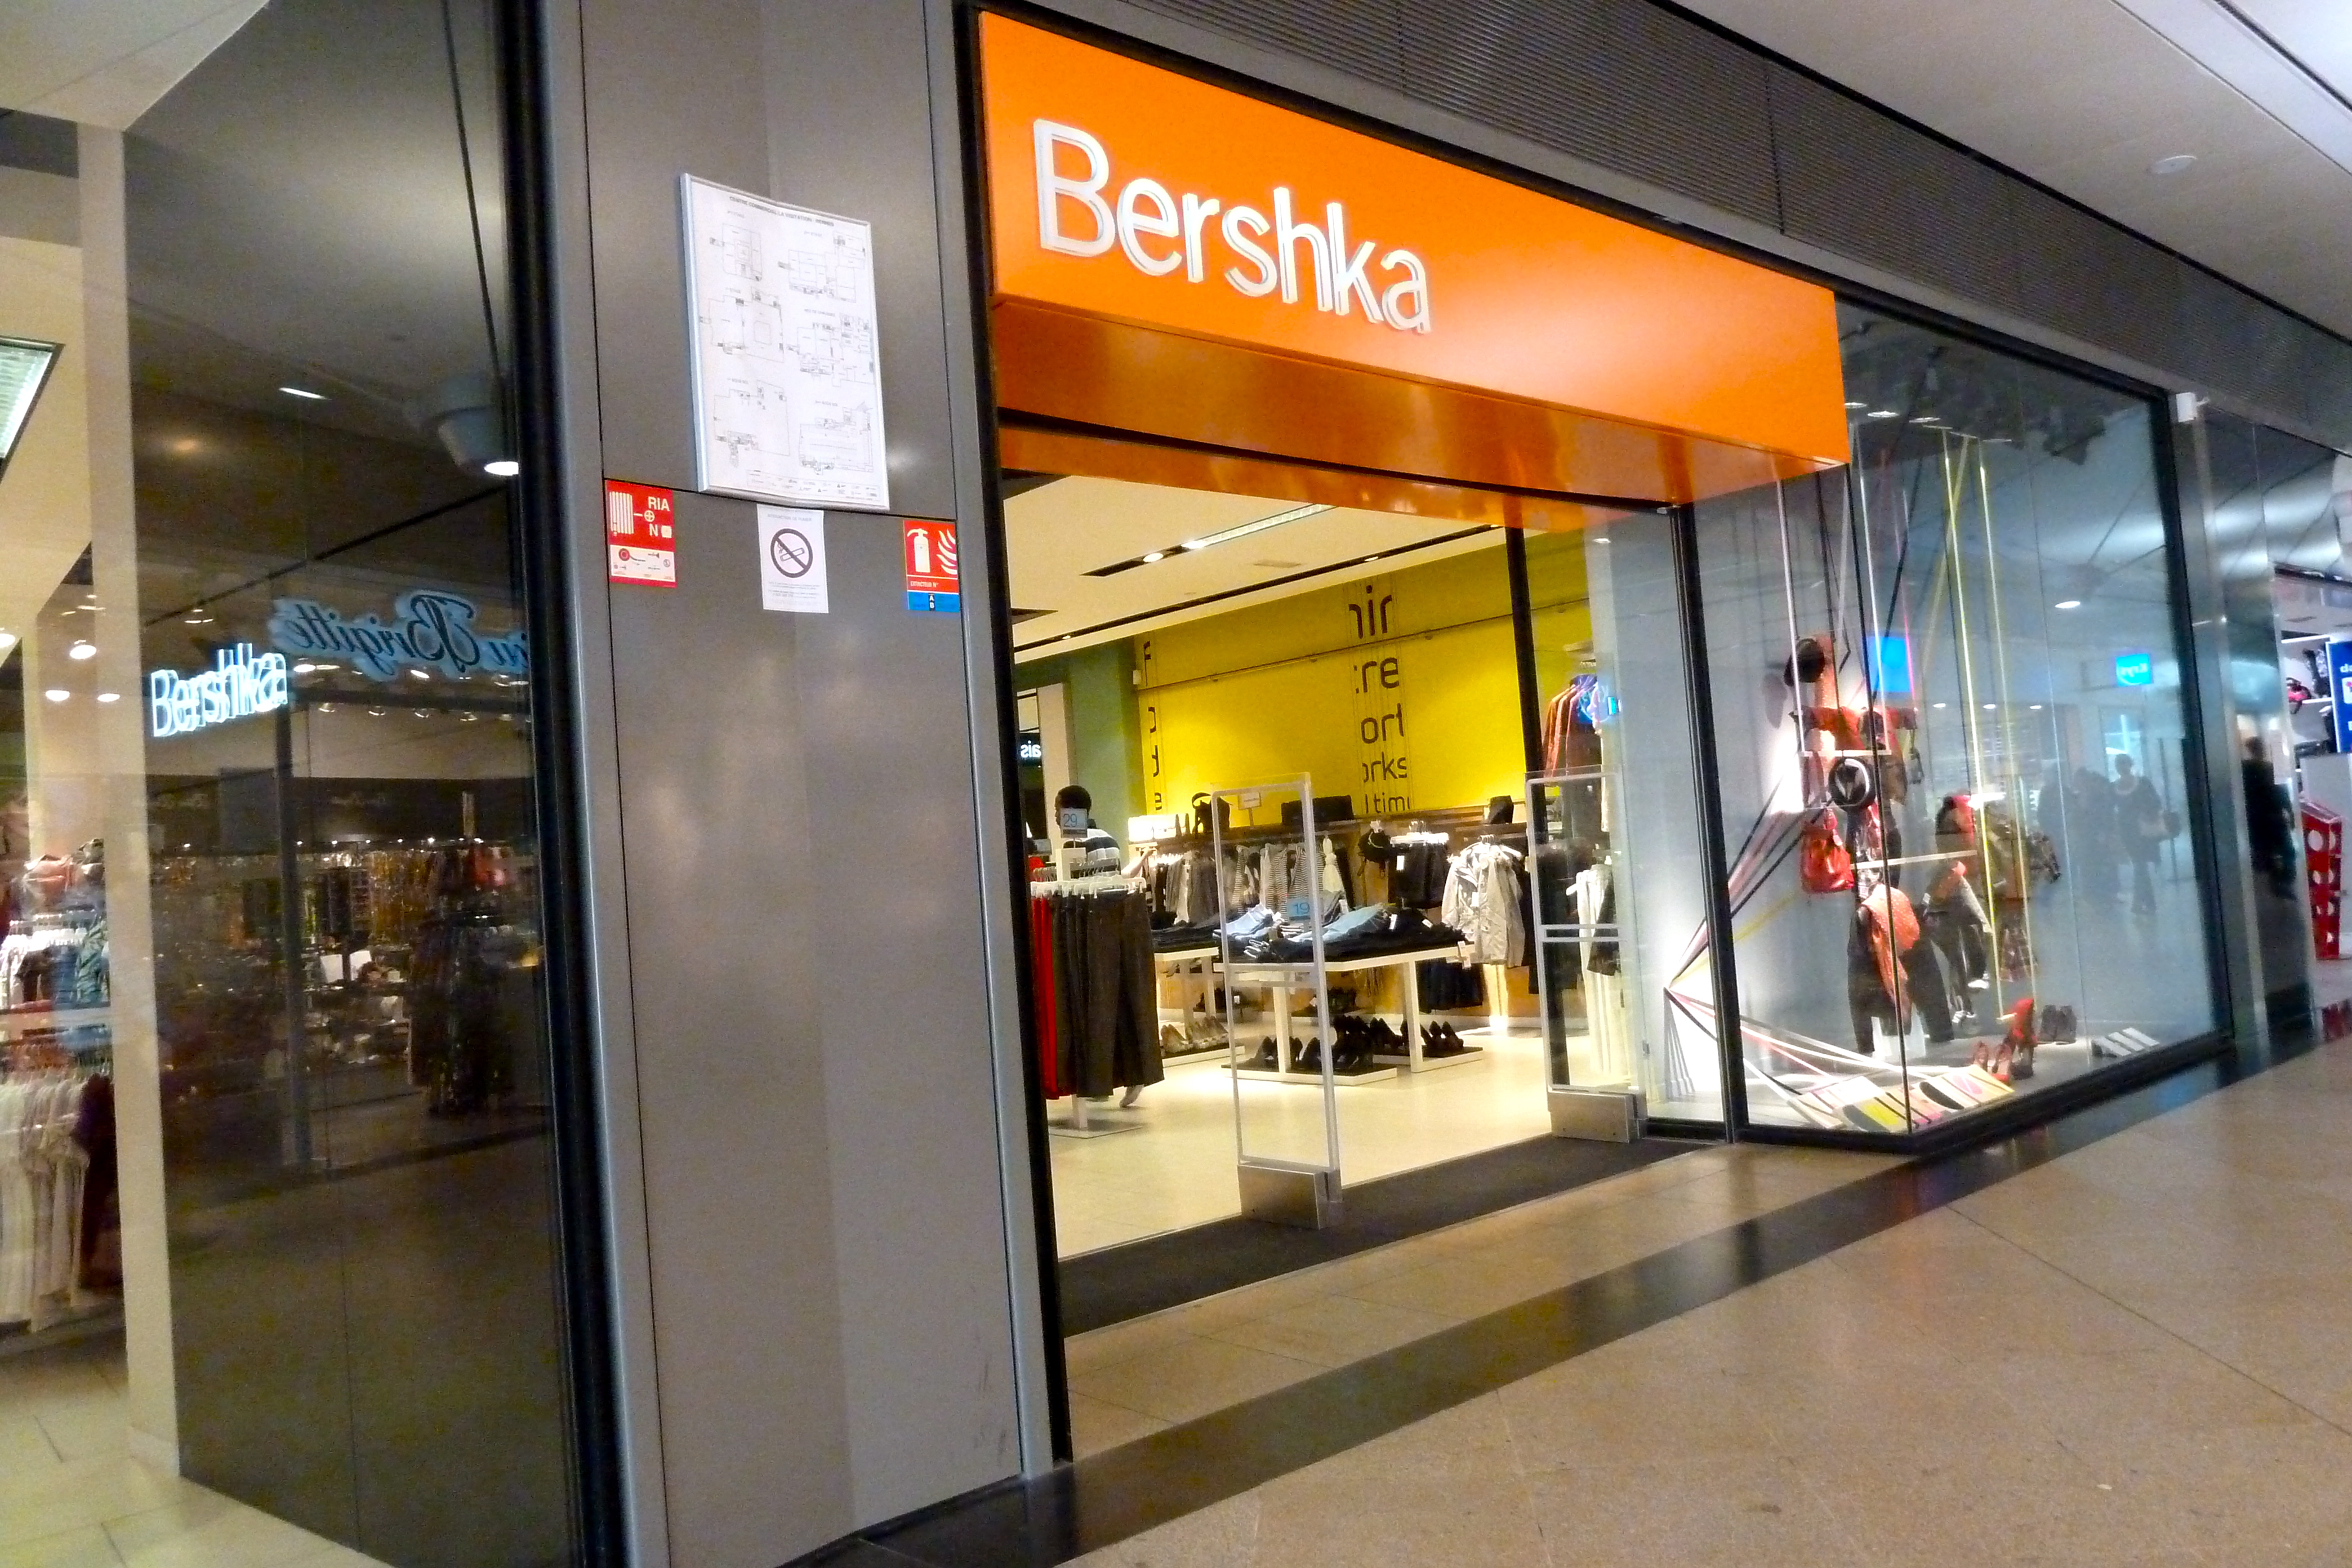 Bershka - Wikipedia, la enciclopedia libre